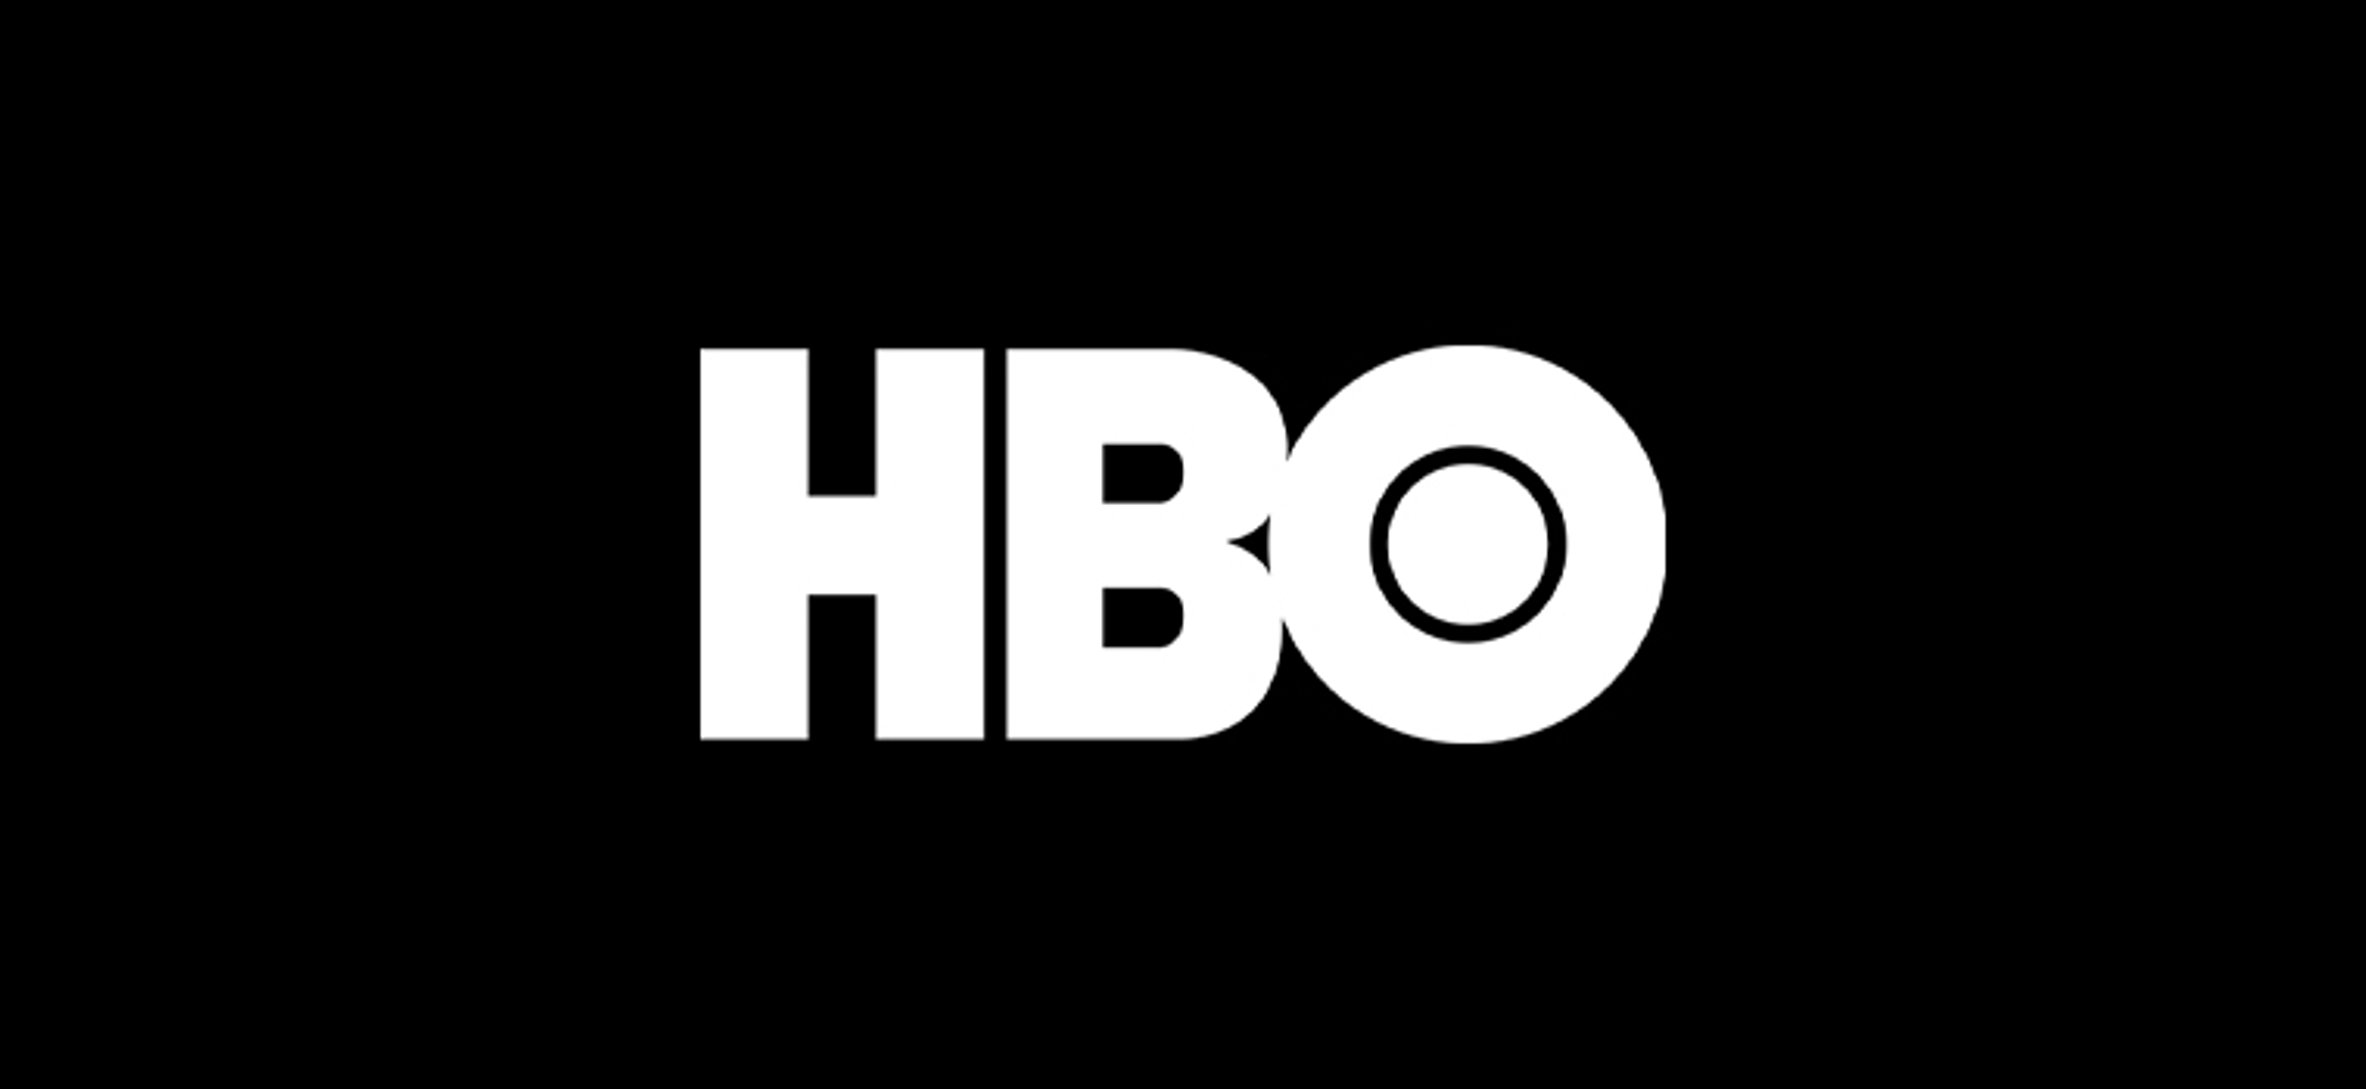 ? RUSH CALL ? New HBO Series based on Stephen King's novel The Outsider is Casting!